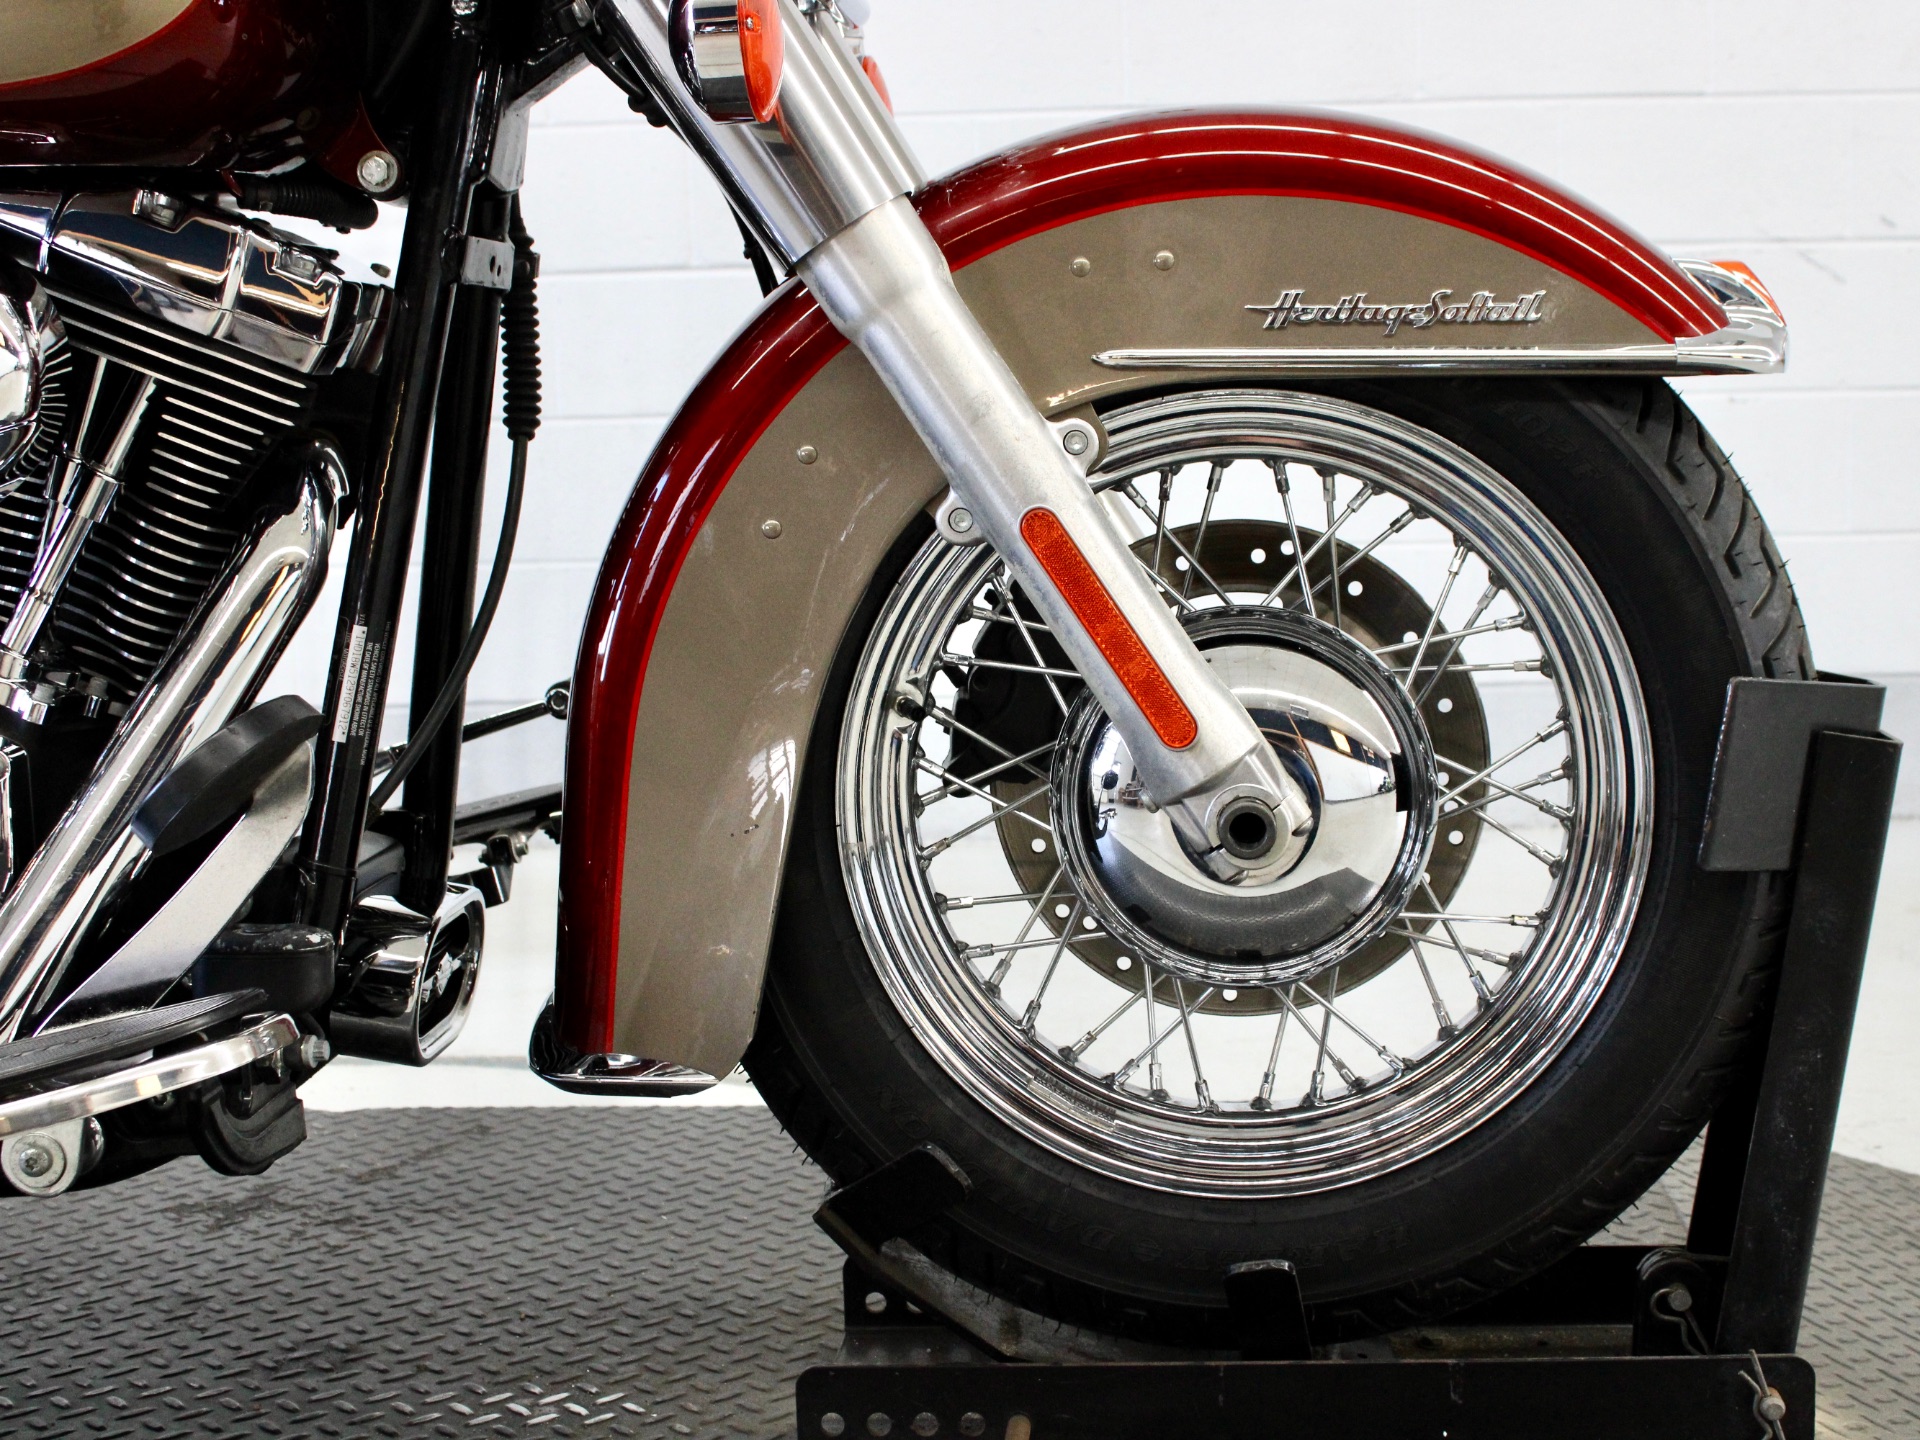 2009 Harley-Davidson Heritage Softail® Classic in Fredericksburg, Virginia - Photo 11